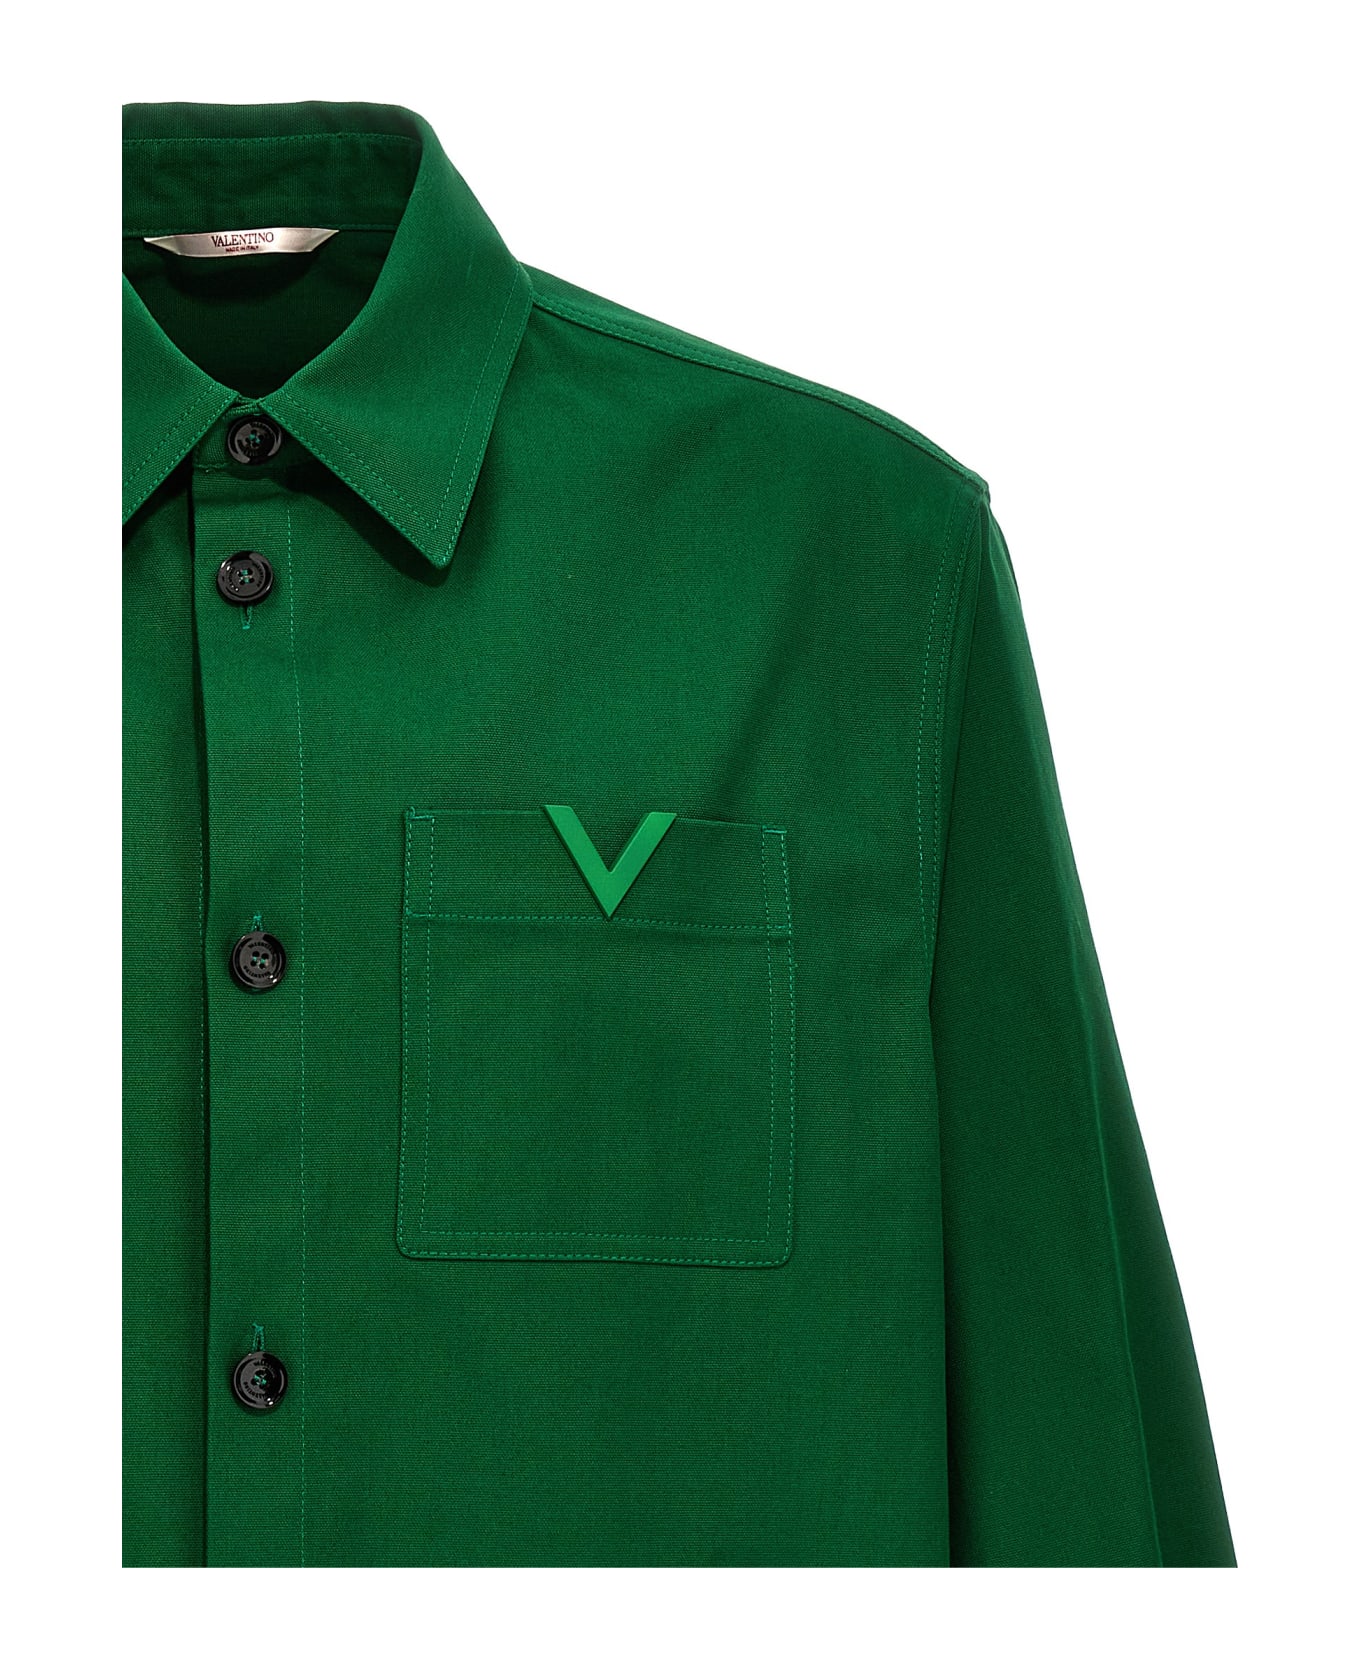 Valentino Garavani Canvas Shirt Jacket - Green シャツ